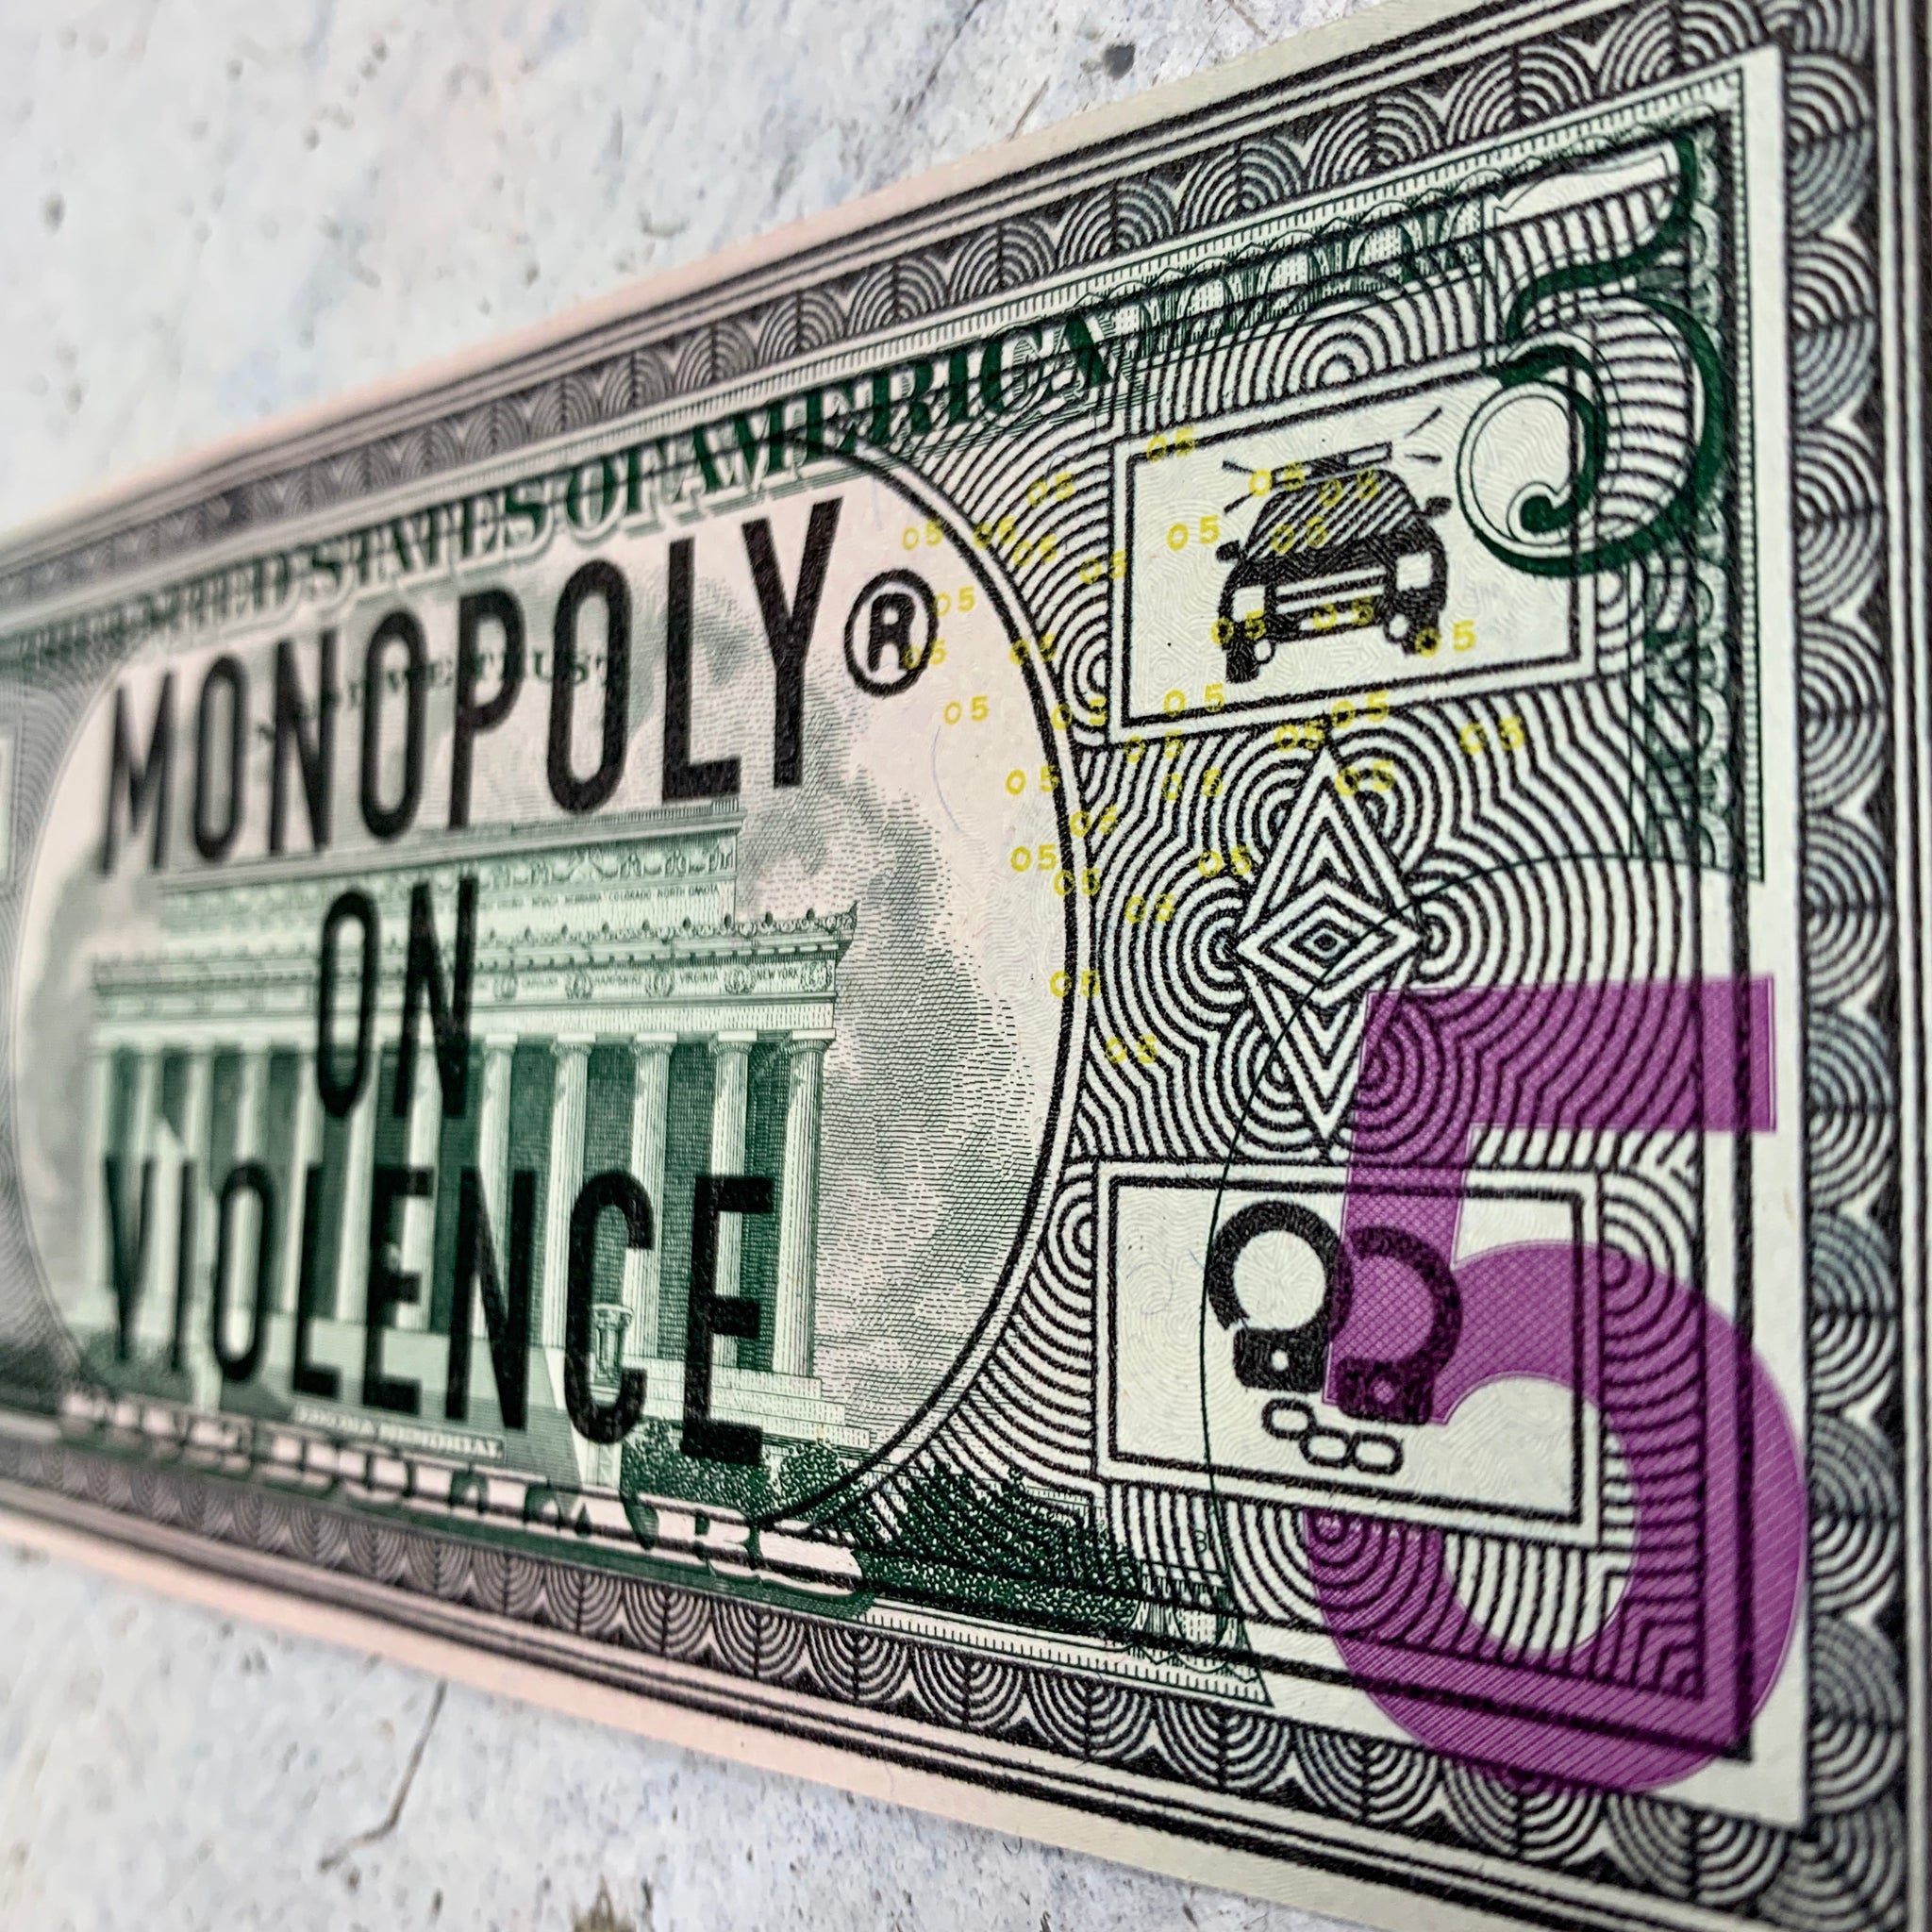 Penny - "Monopoly on Violence" (AP)